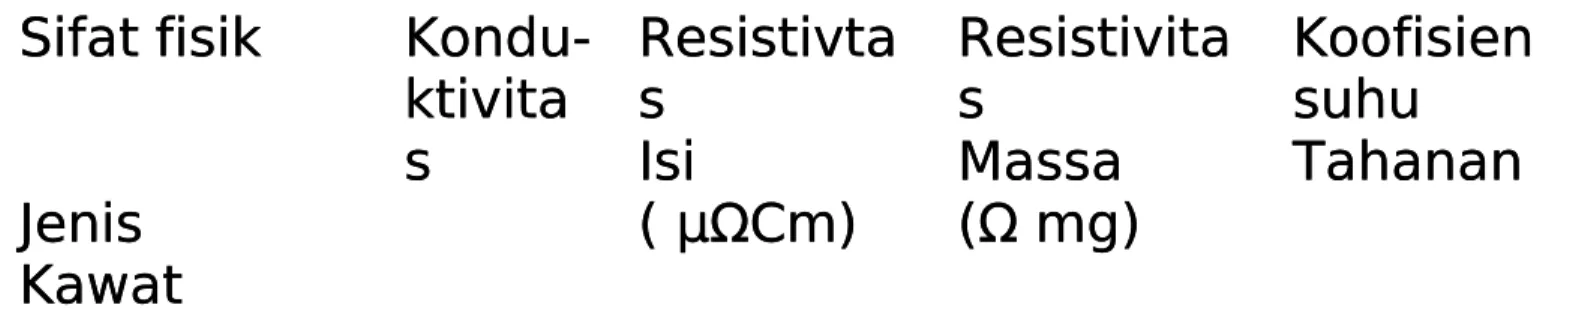 Tabel 2.2 Tabel resistivitas kabel tanpa isolasi padaTabel 2.2 Tabel resistivitas kabel tanpa isolasi pada suhu 20suhu 20 00 CC Sifat fisikSifat fisik JenisJenis KawatKawat Kondu-ktivitaktivitass ResistivtaResistivtassIsiIsi( μΩCm)( μΩCm) ResistivitaResist